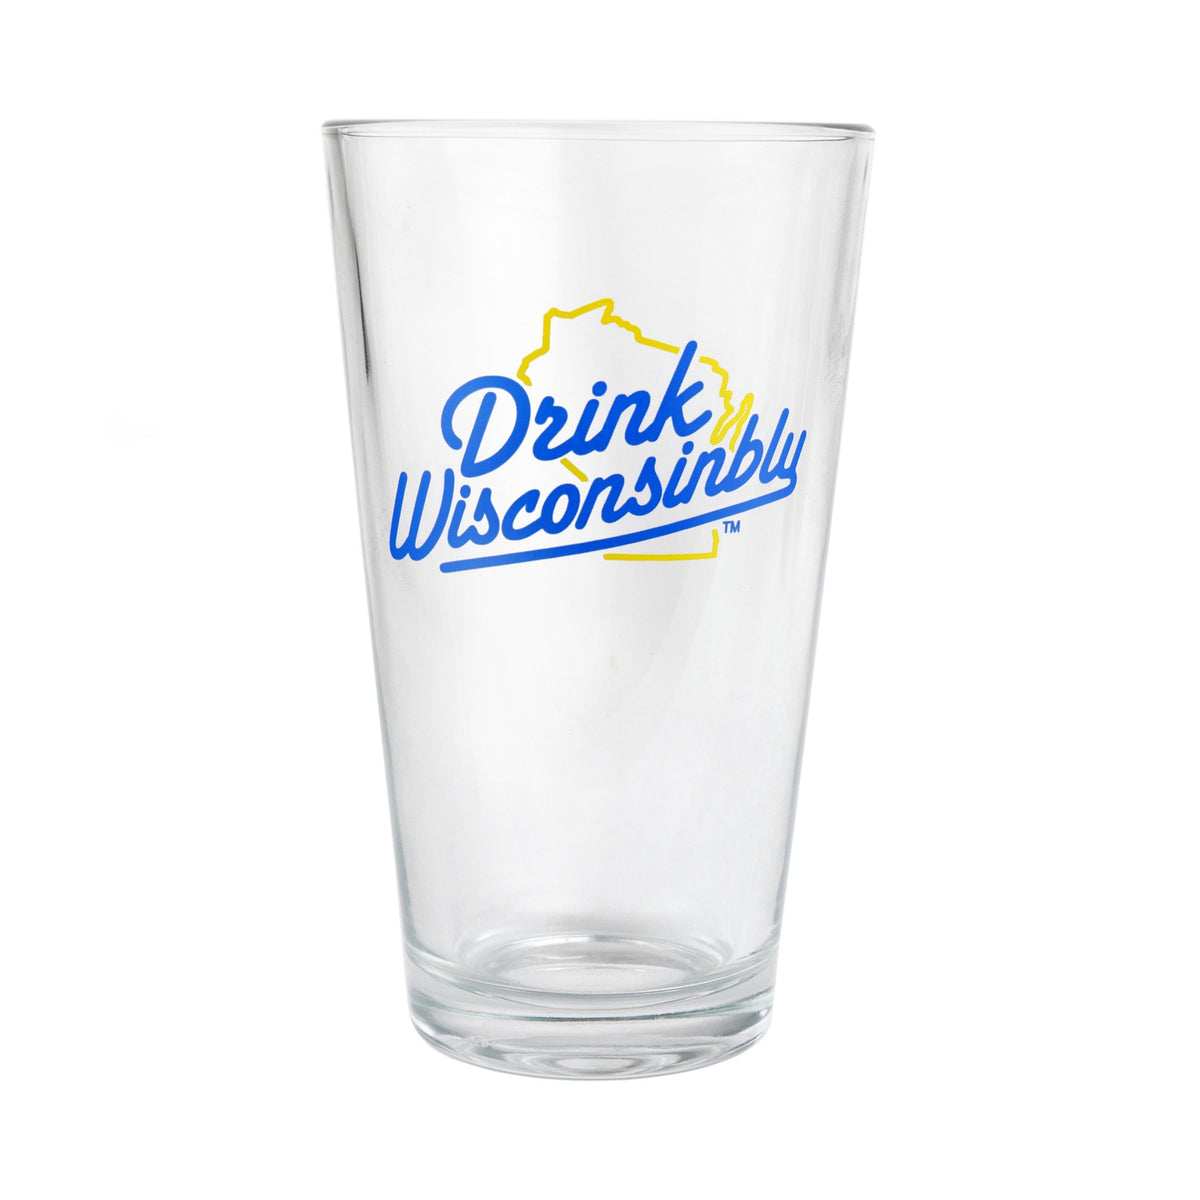 Drink Wisconsinbly Bayfield Blue Pint Glass